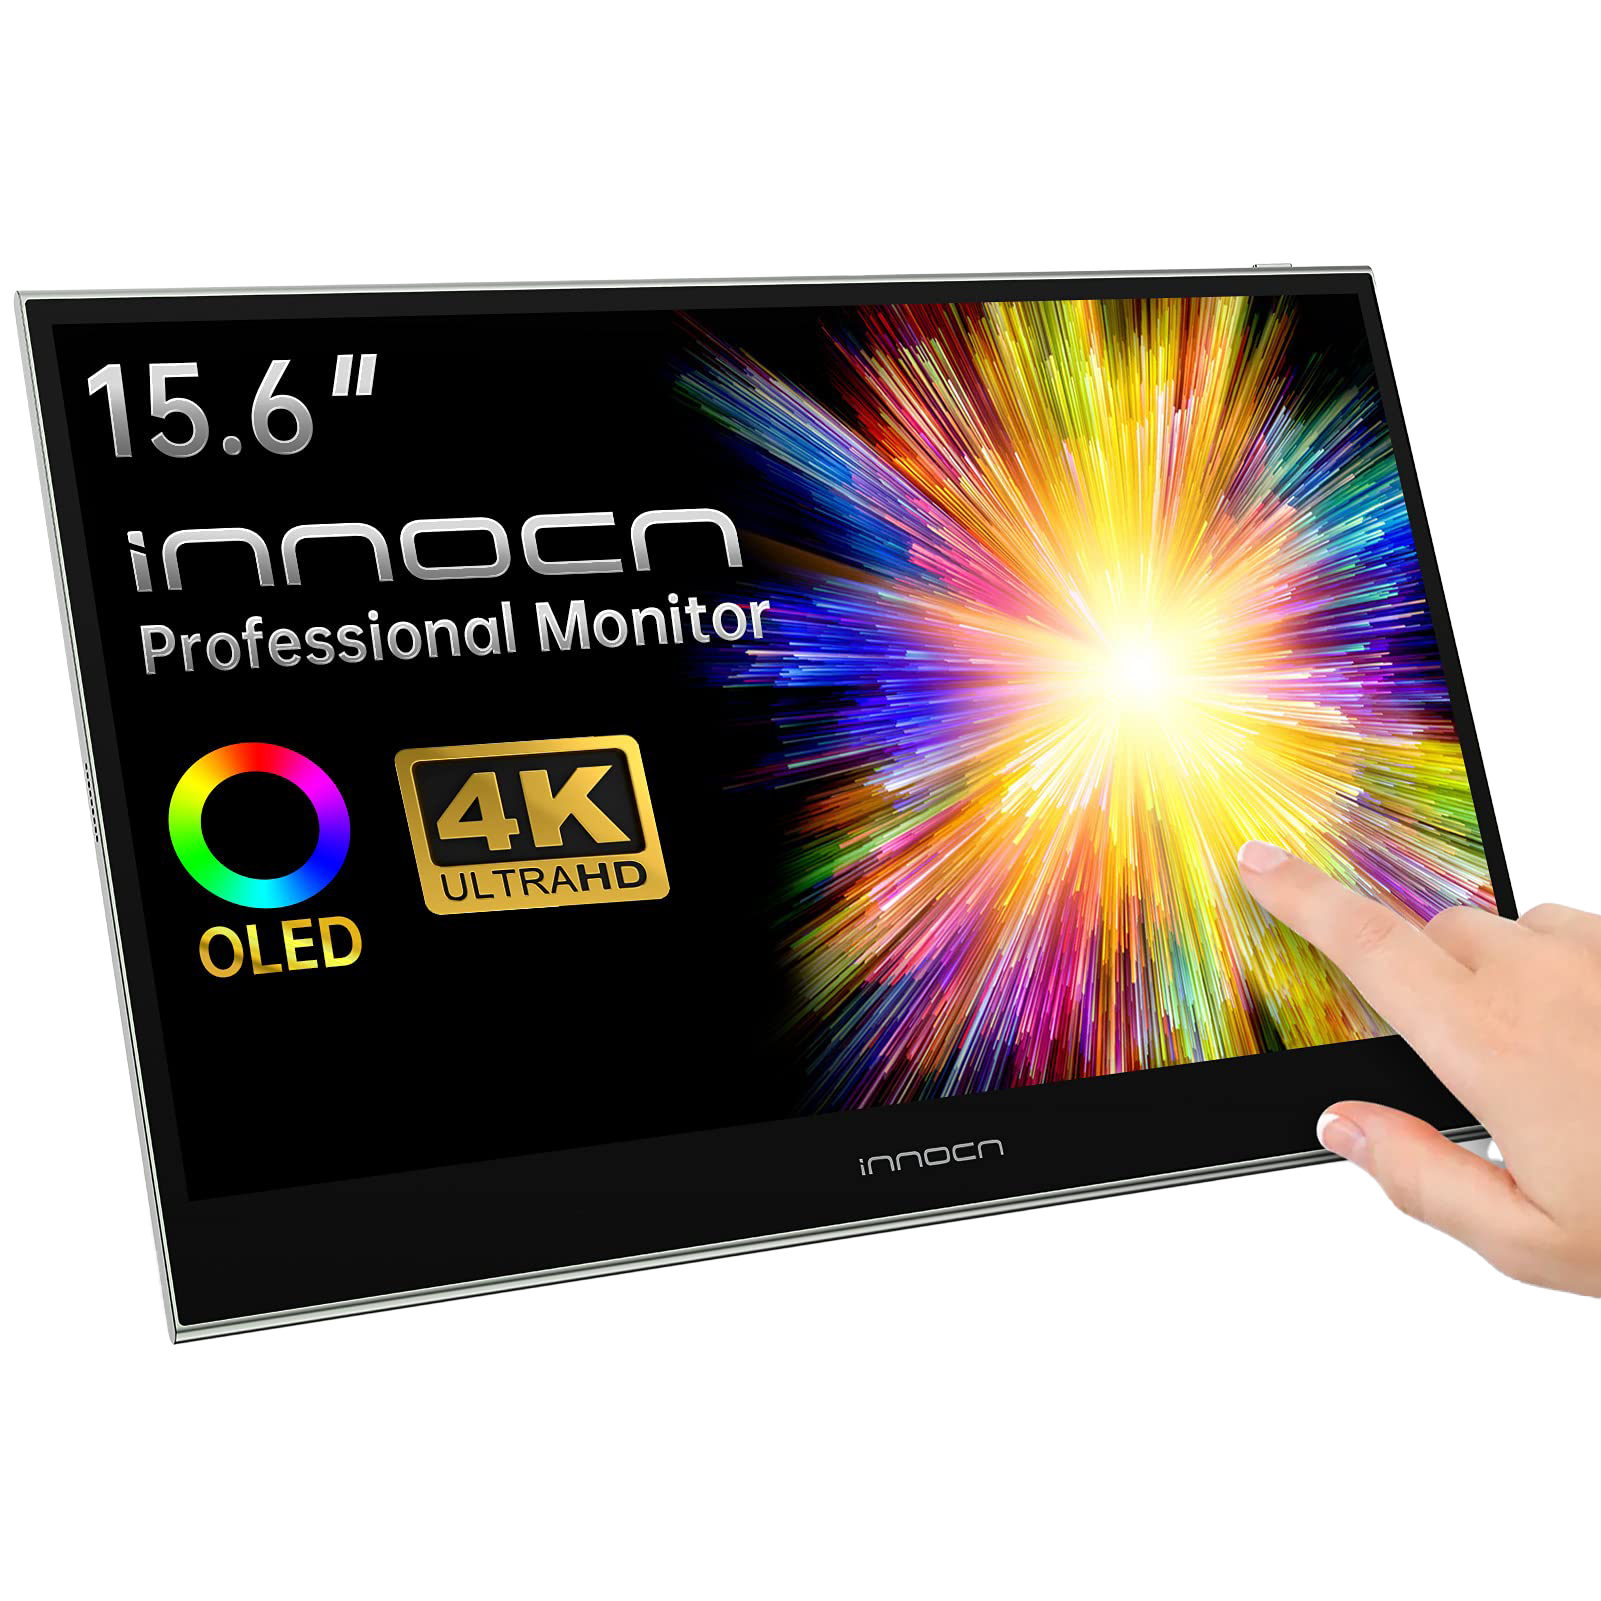 Innocn 15.6-inch portable OLED monitor